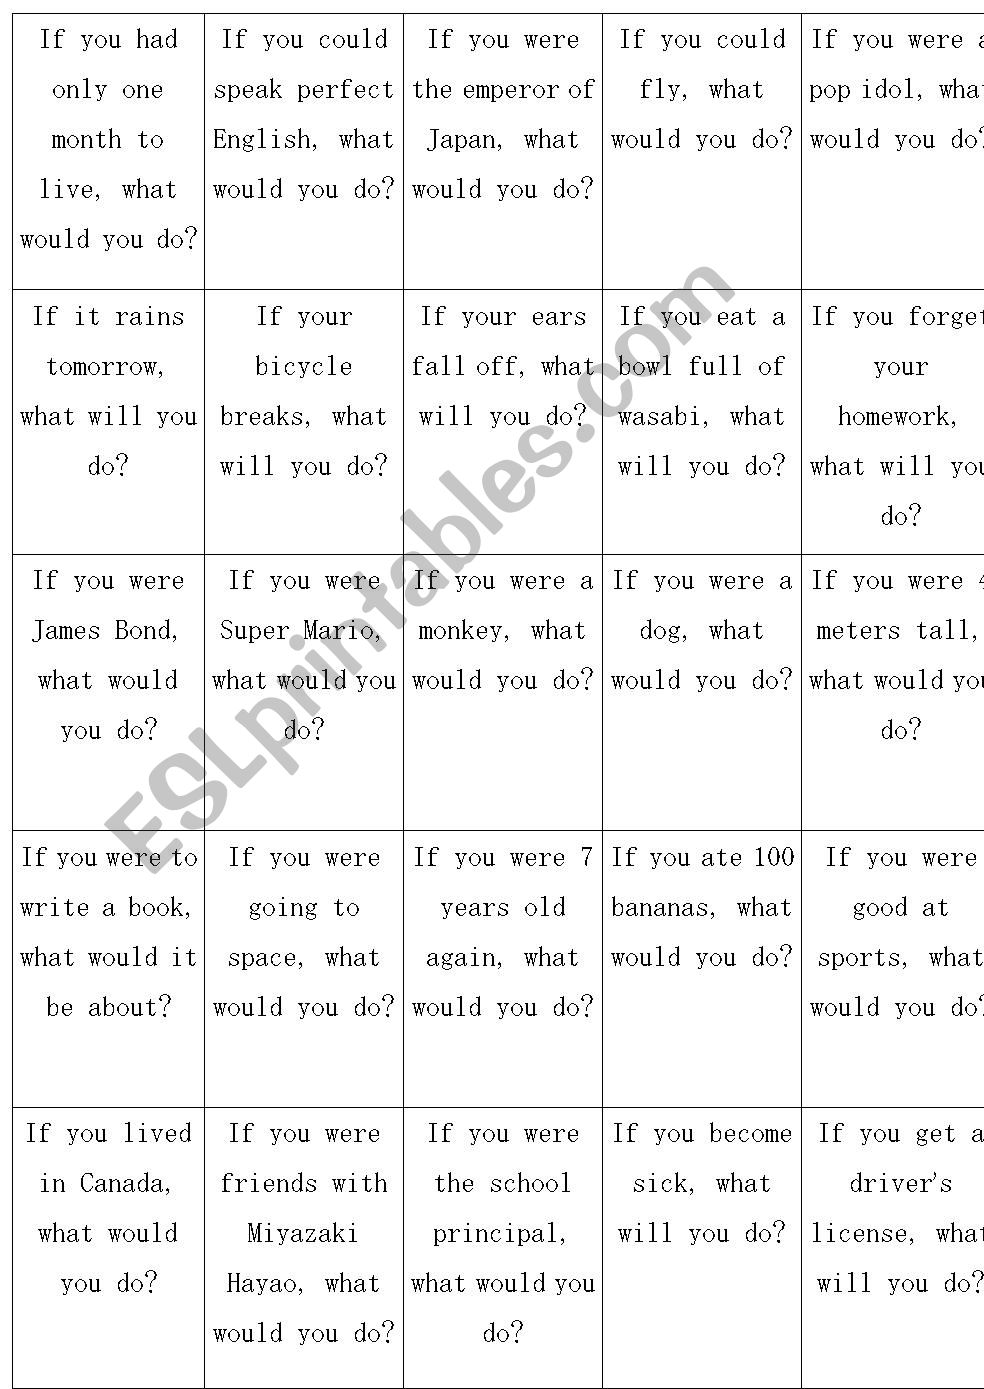 Subjunctive Mood Card Game worksheet